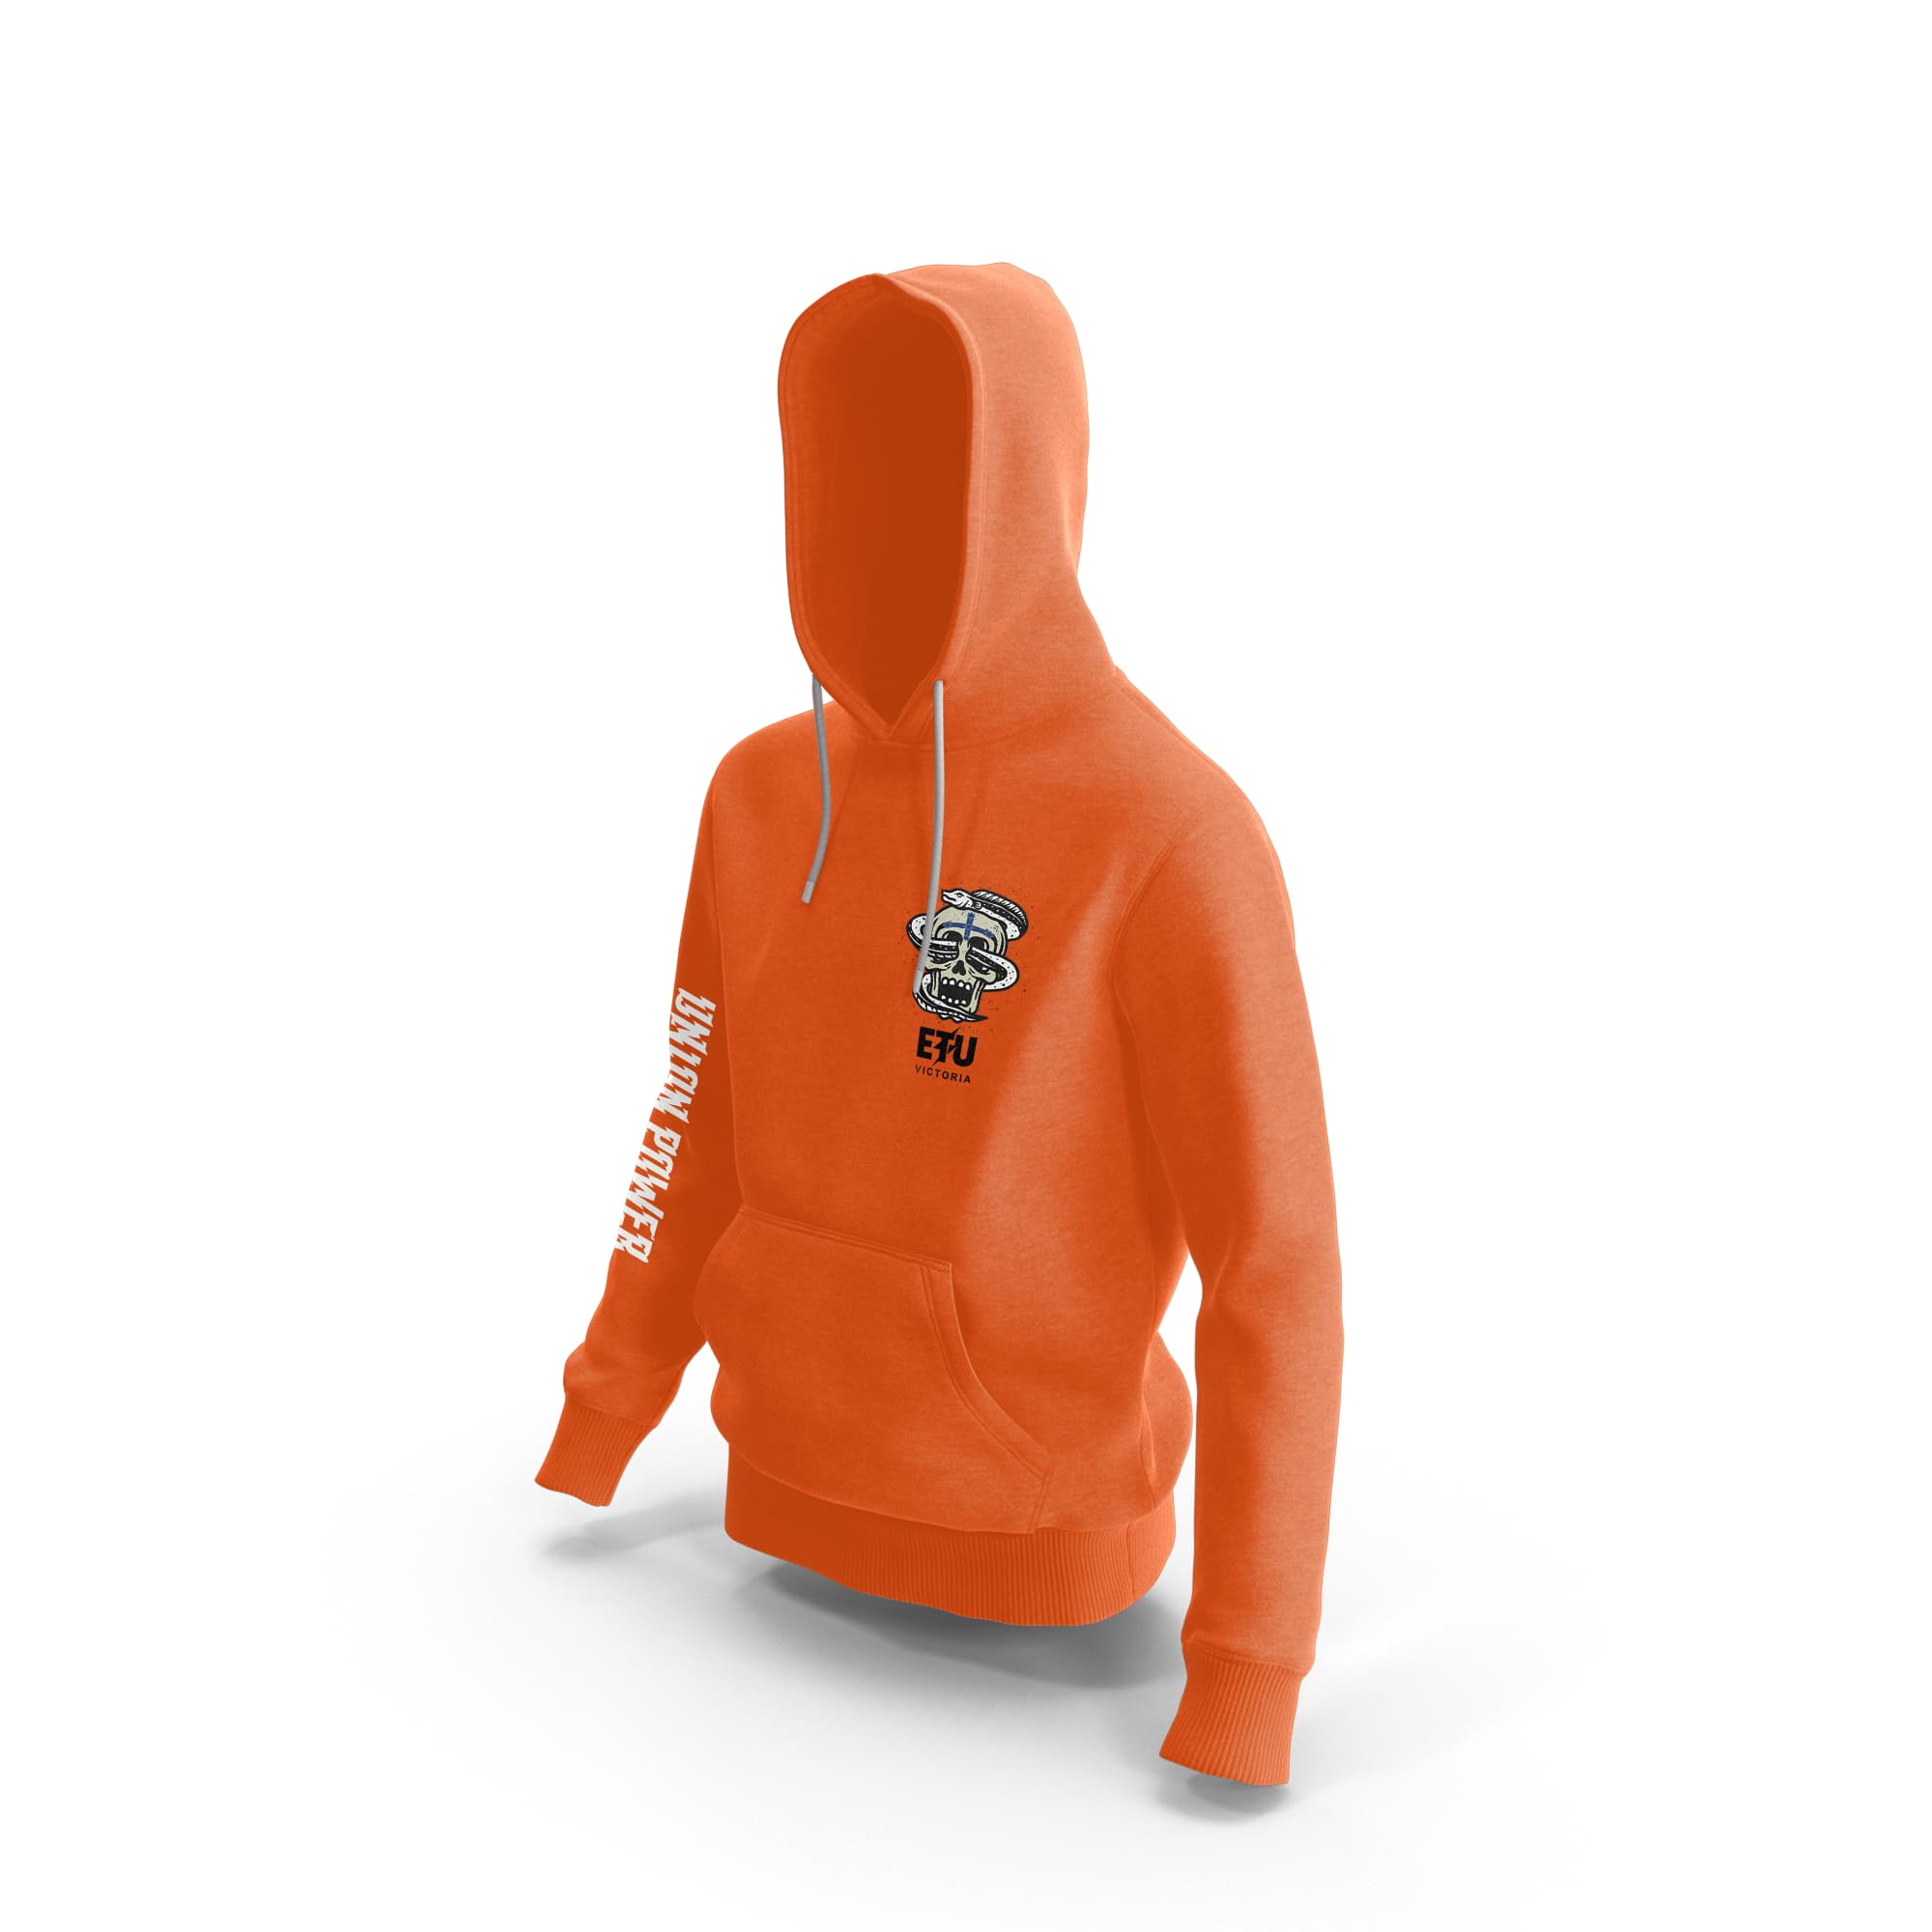 Eel and Skull Hi Vis Orange Hooded ETU Sweatshirt